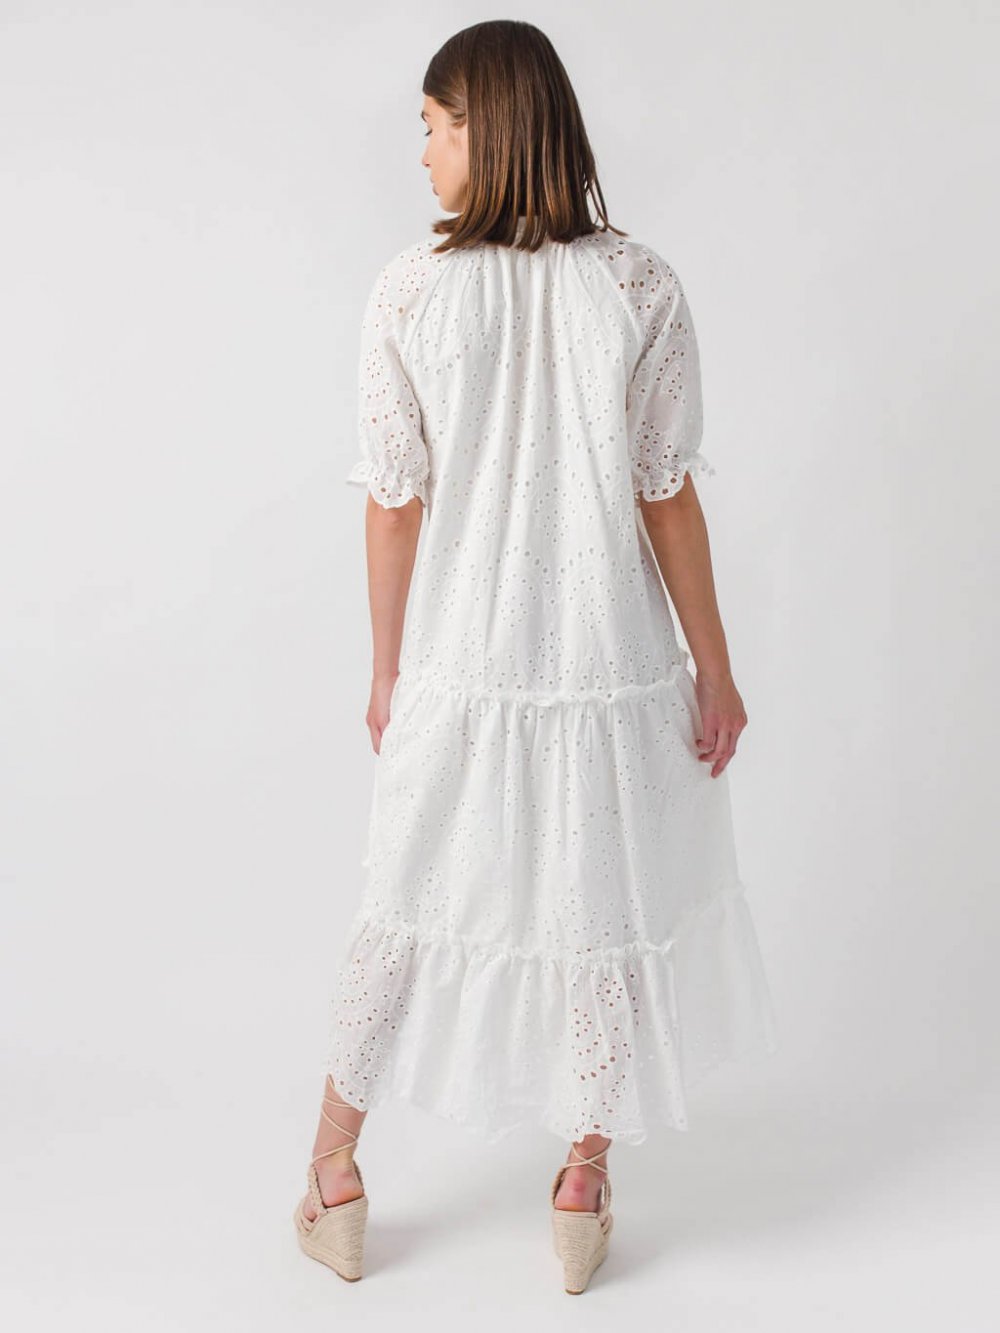 Biele šaty Madera